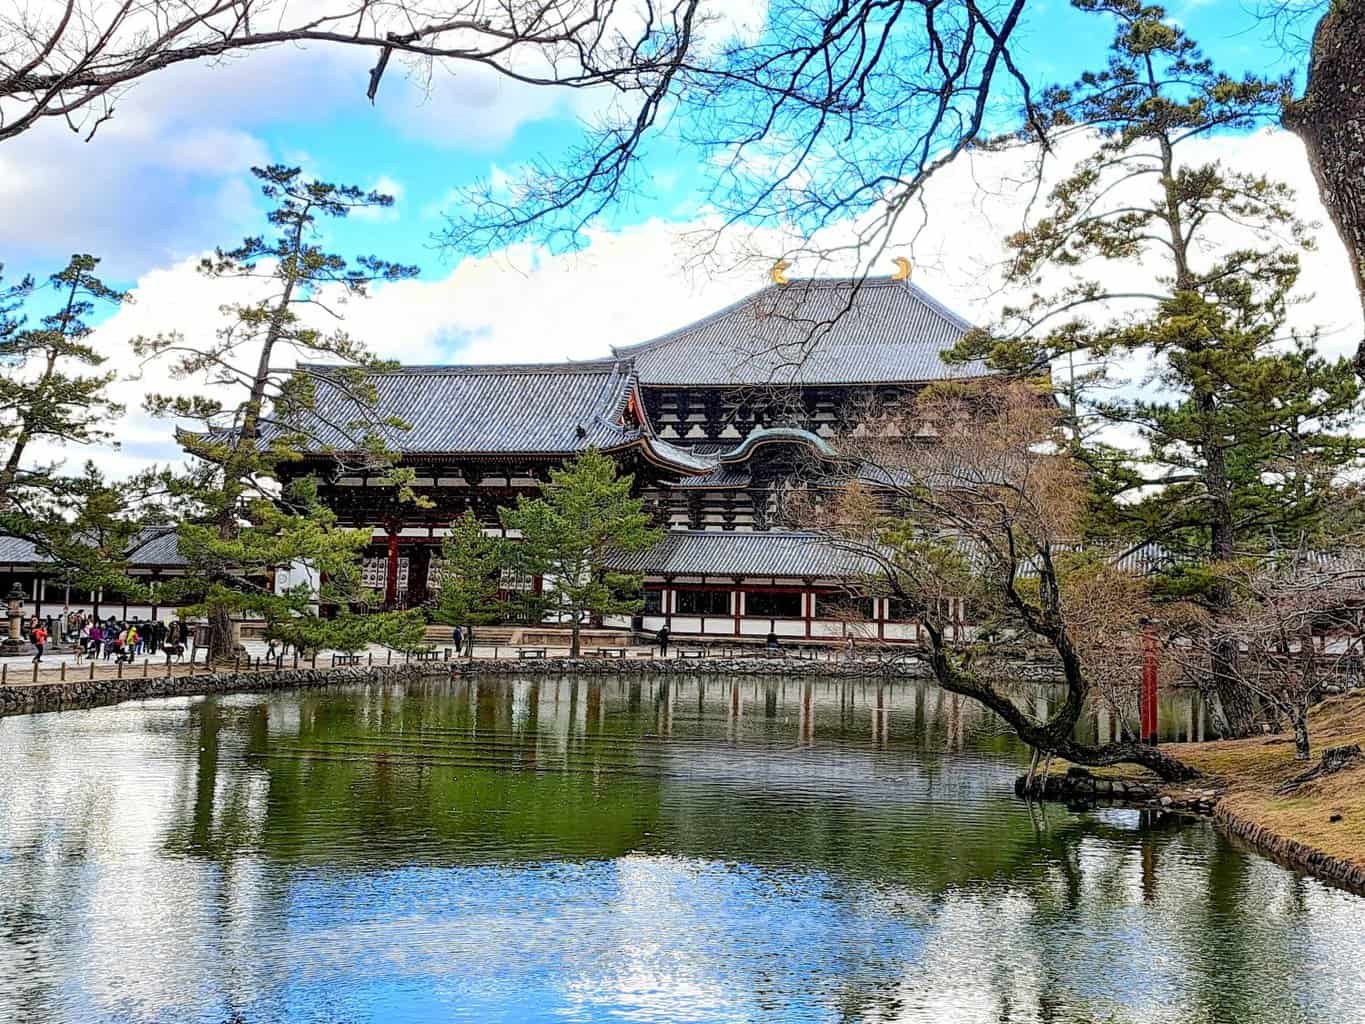 Todai-ji Kondo Hakkaku Toro temple sits in front of a tranquil pond in Nara Deer Park, Japan